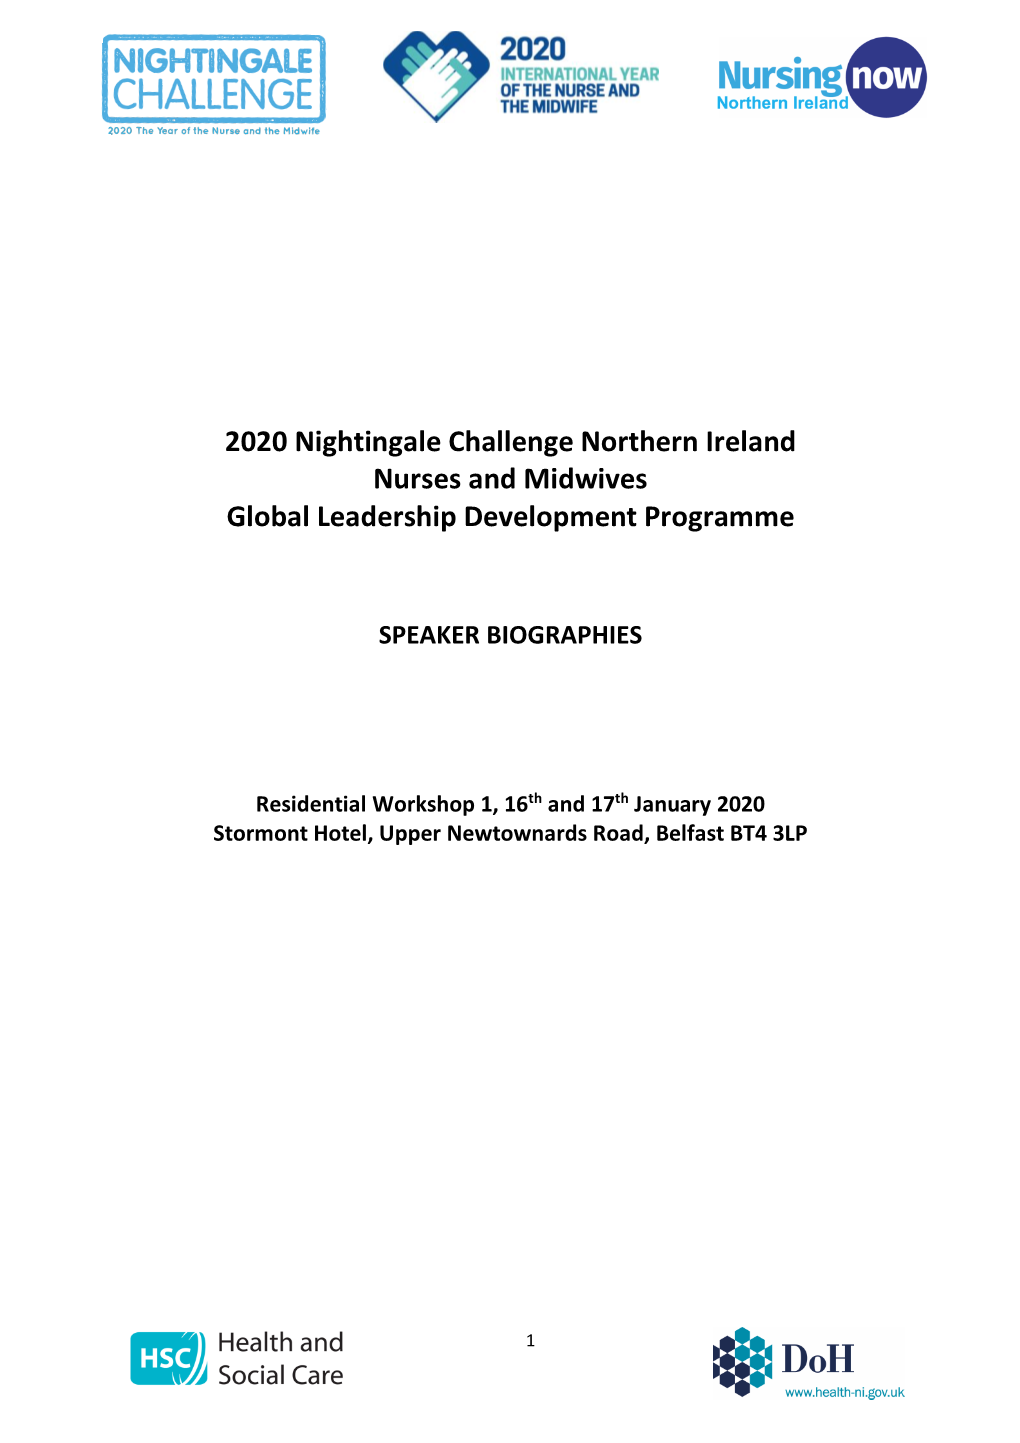 2020 Nightingale Challenge Northern Ireland Nurses and Midwives Global Leadership Development Programme